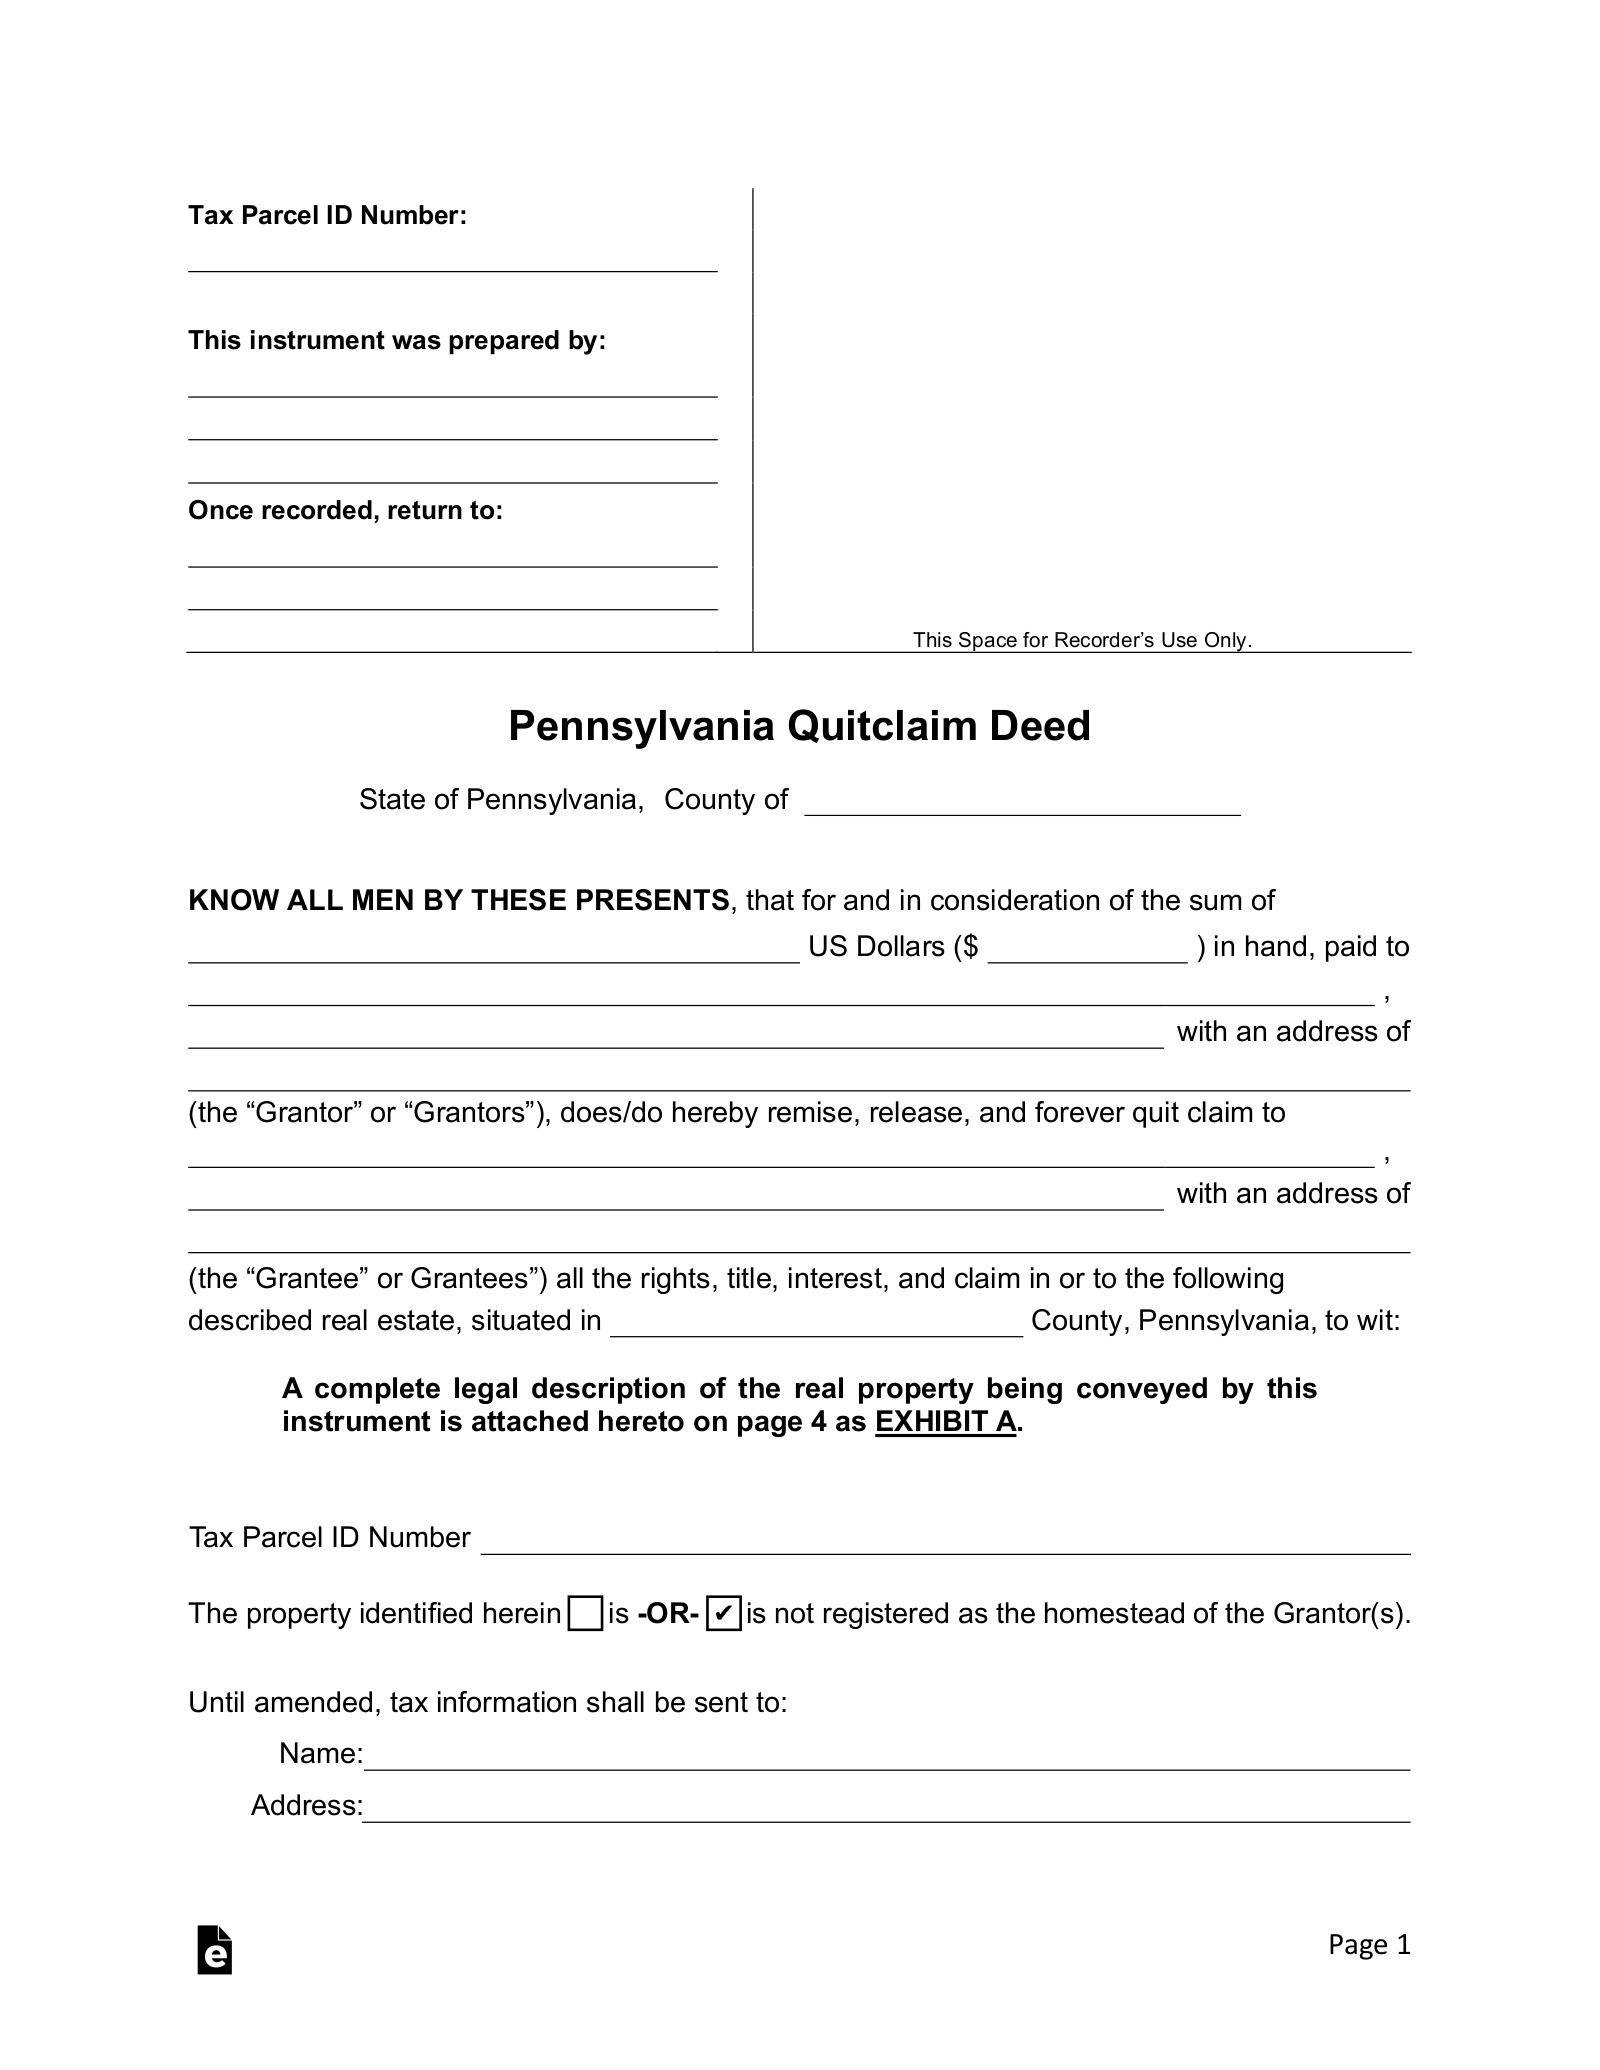 free-pennsylvania-quit-claim-deed-form-pdf-word-eforms